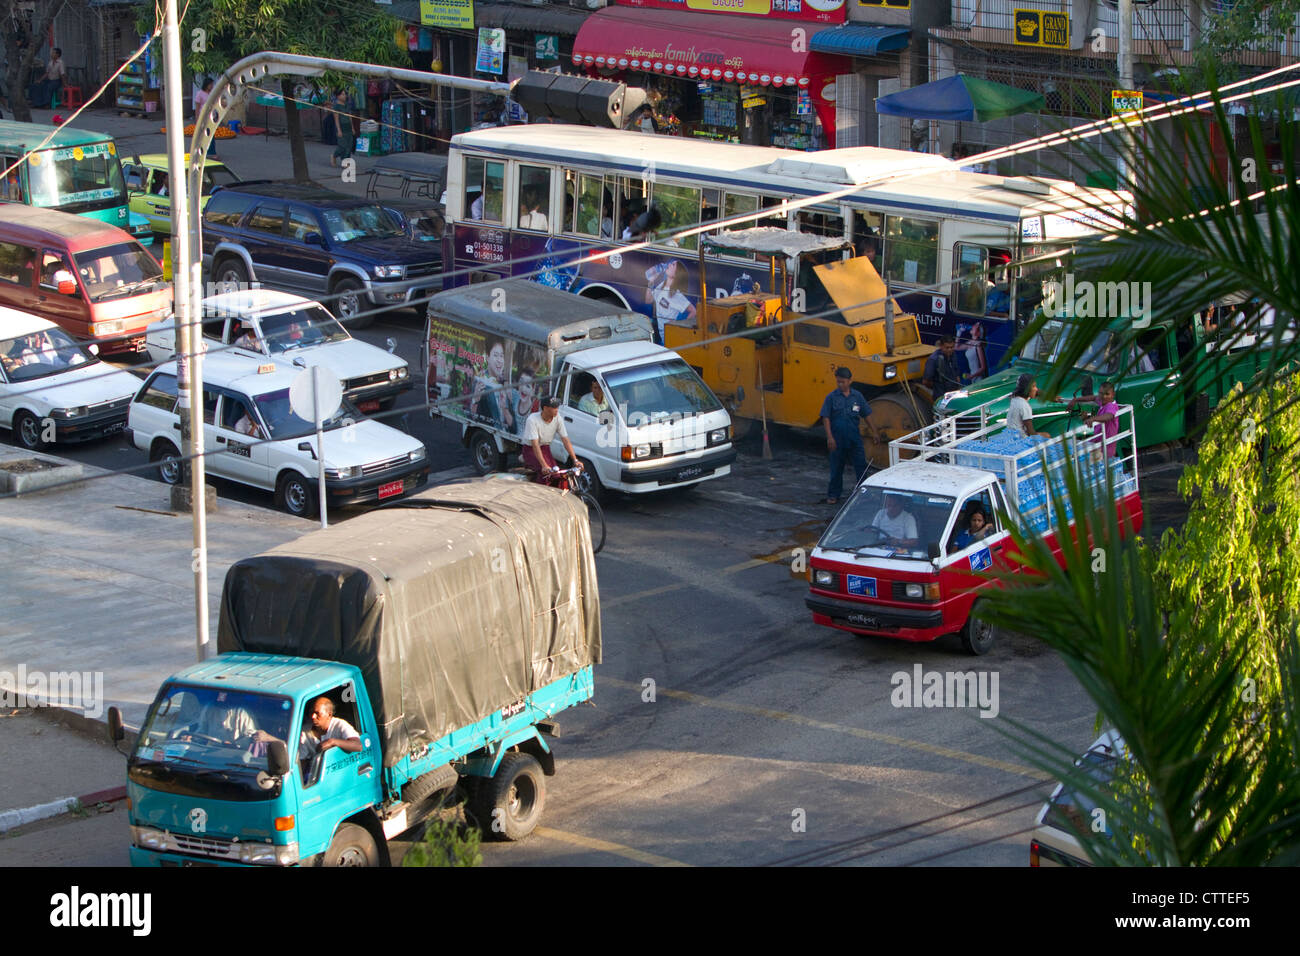 Traffic on the street in (Rangoon) Yangon, (Burma) Myanmar. Stock Photo